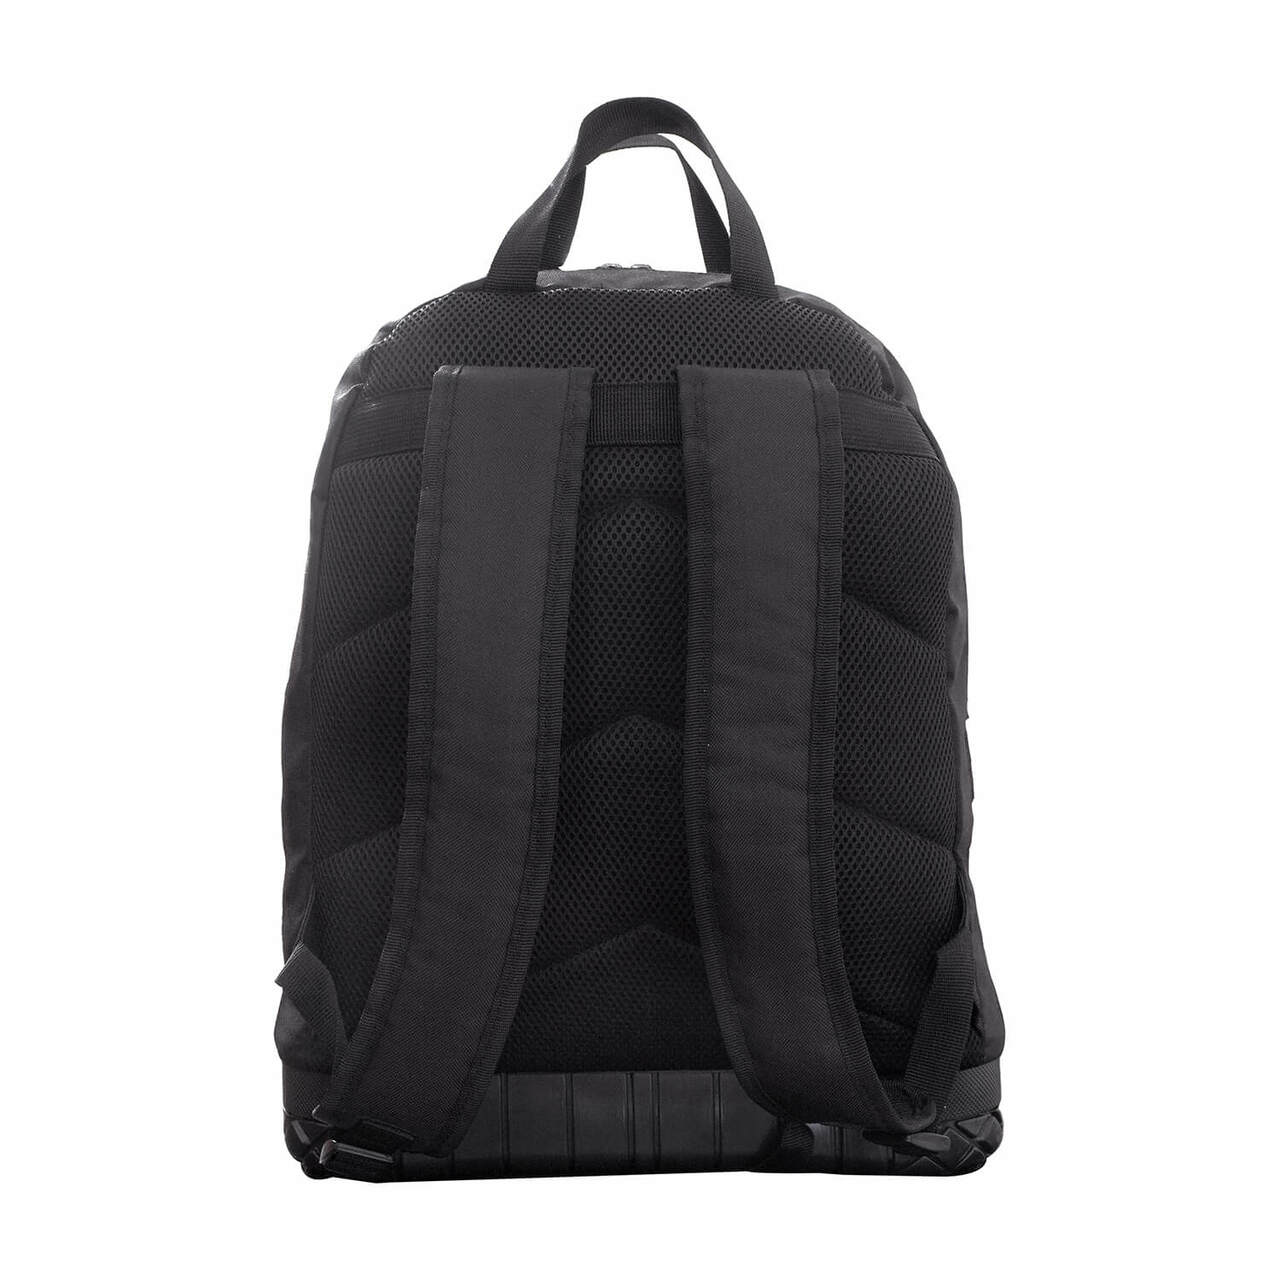 Penn State Nittany Lions Tool Bag Backpack